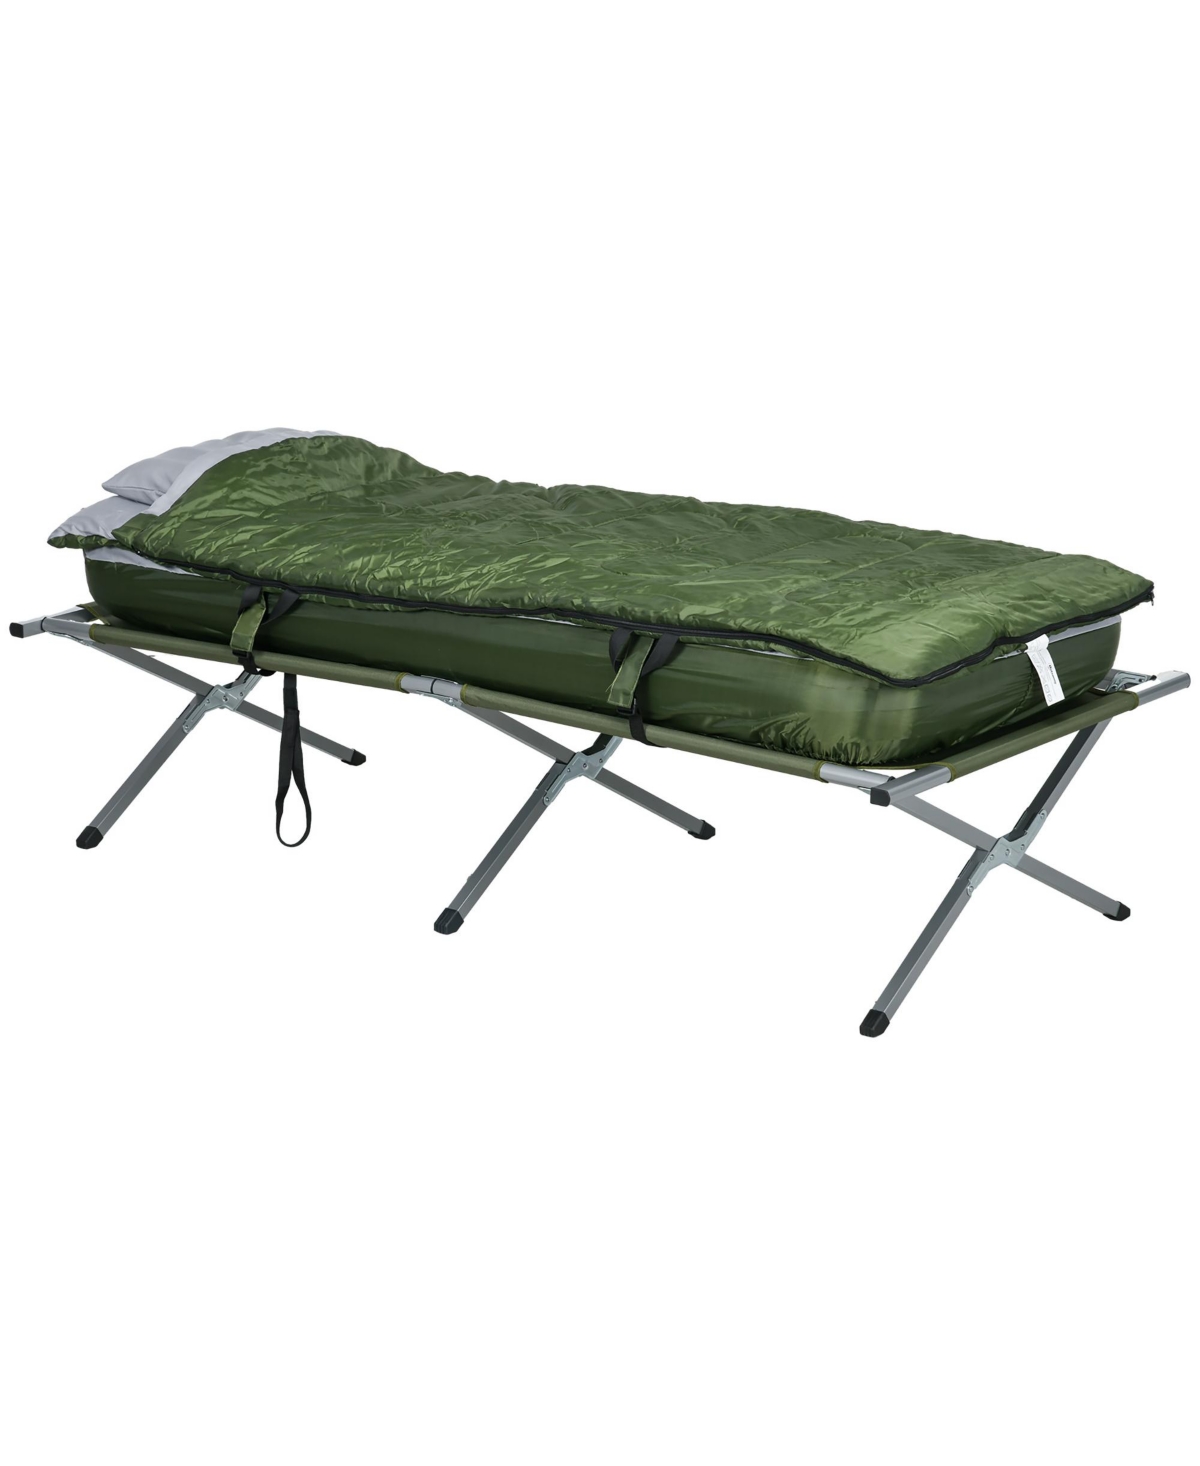 Folding Camping Cot w/ Mattress, Sleeping Bag, Pillow, Bag, Green - Green